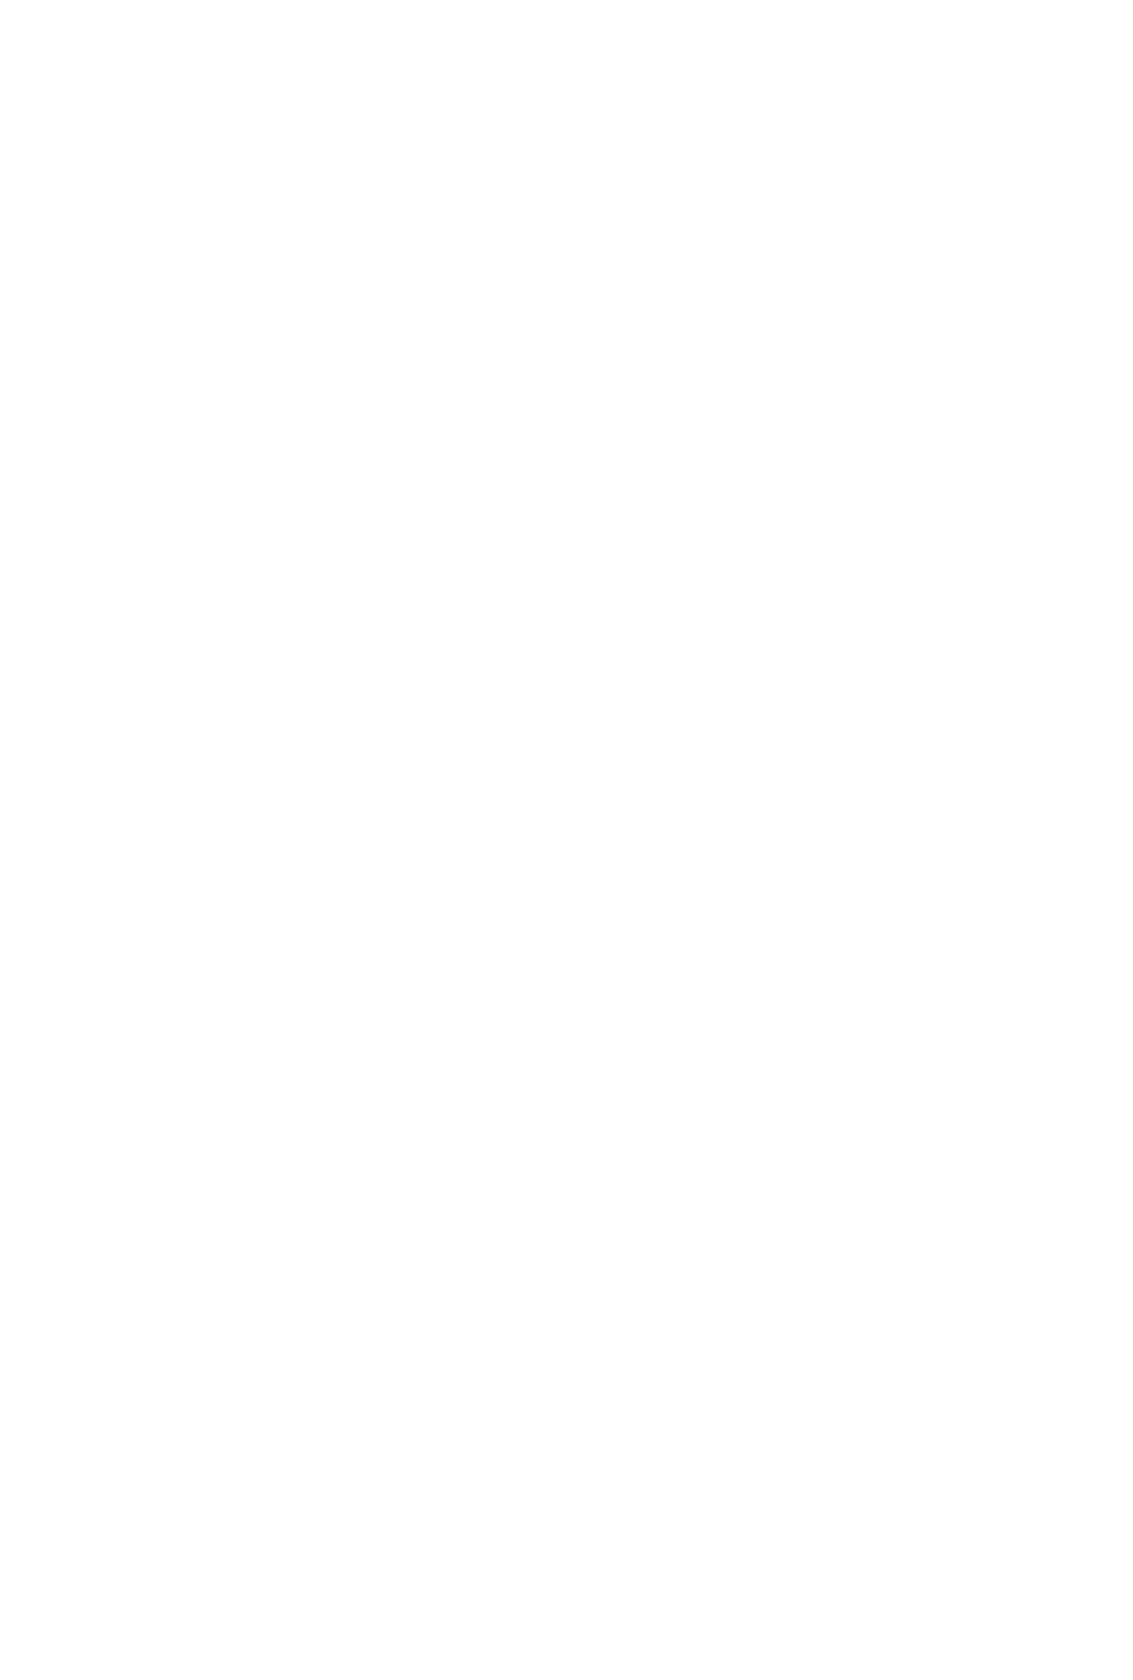 Rashtriya Chemicals and Fertilizers logo large for dark backgrounds (transparent PNG)